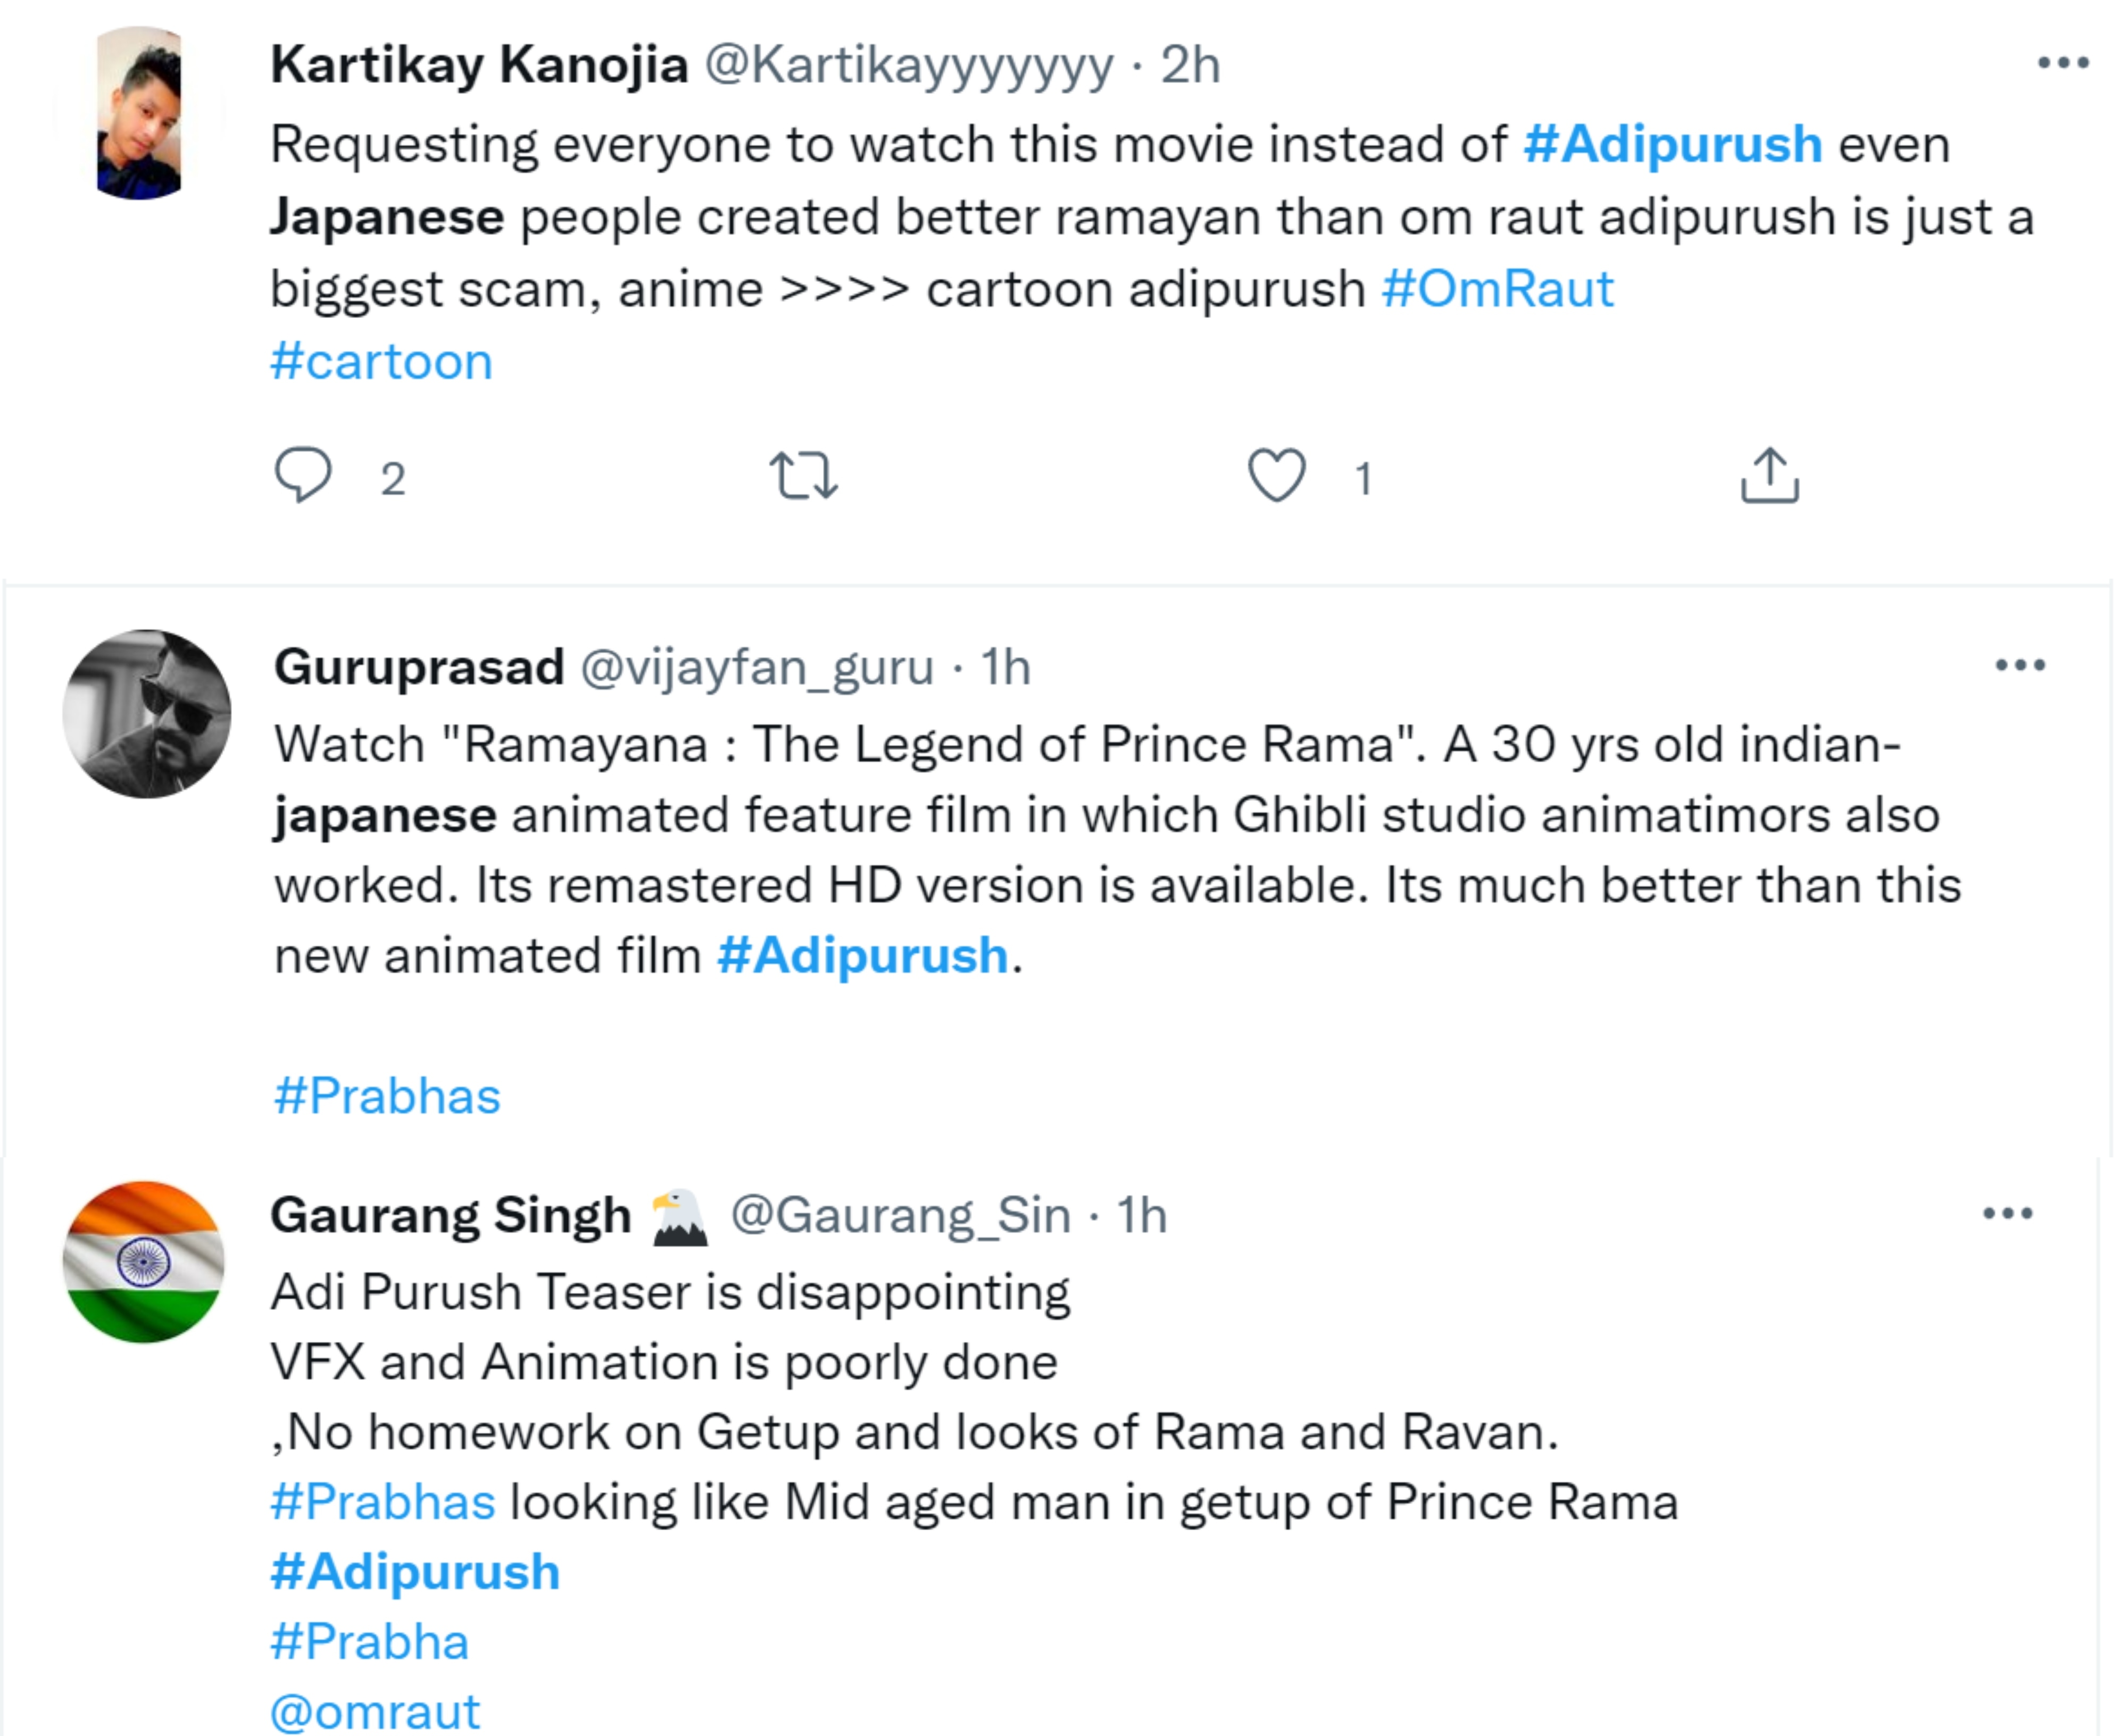 Tweets about Adipurush's VFX.